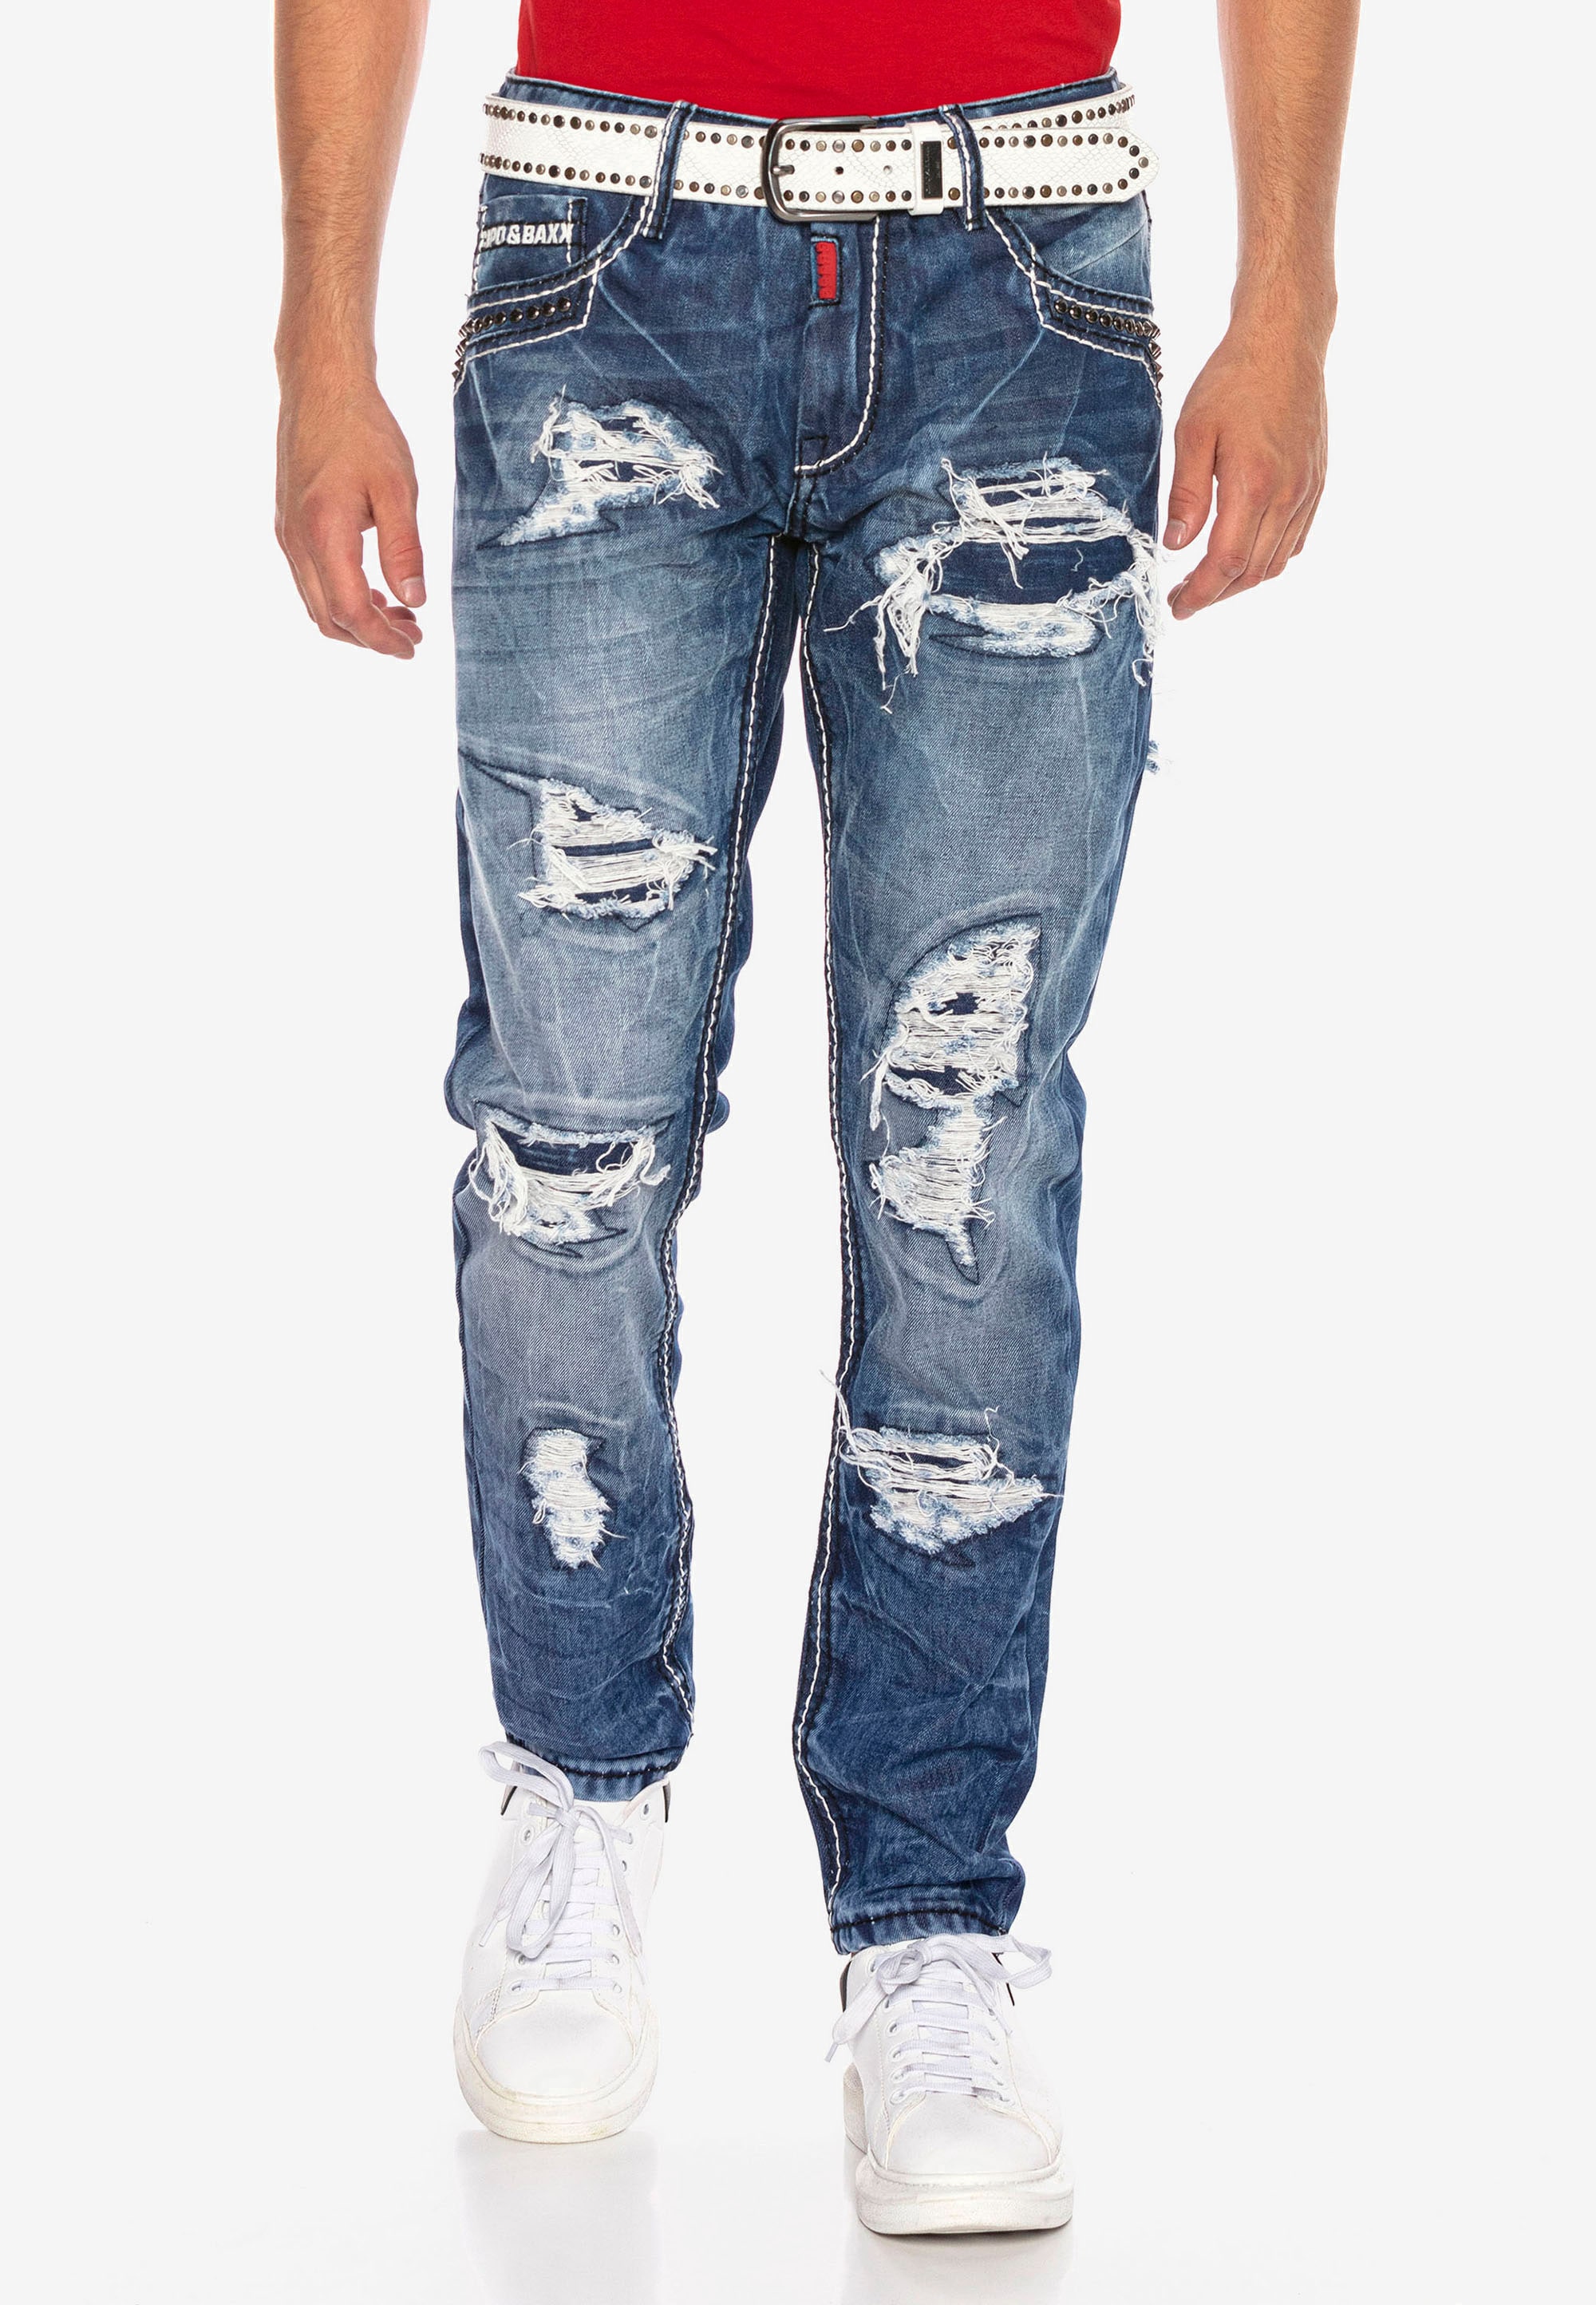 Bequeme Jeans, im angesagten Destroyed-Look